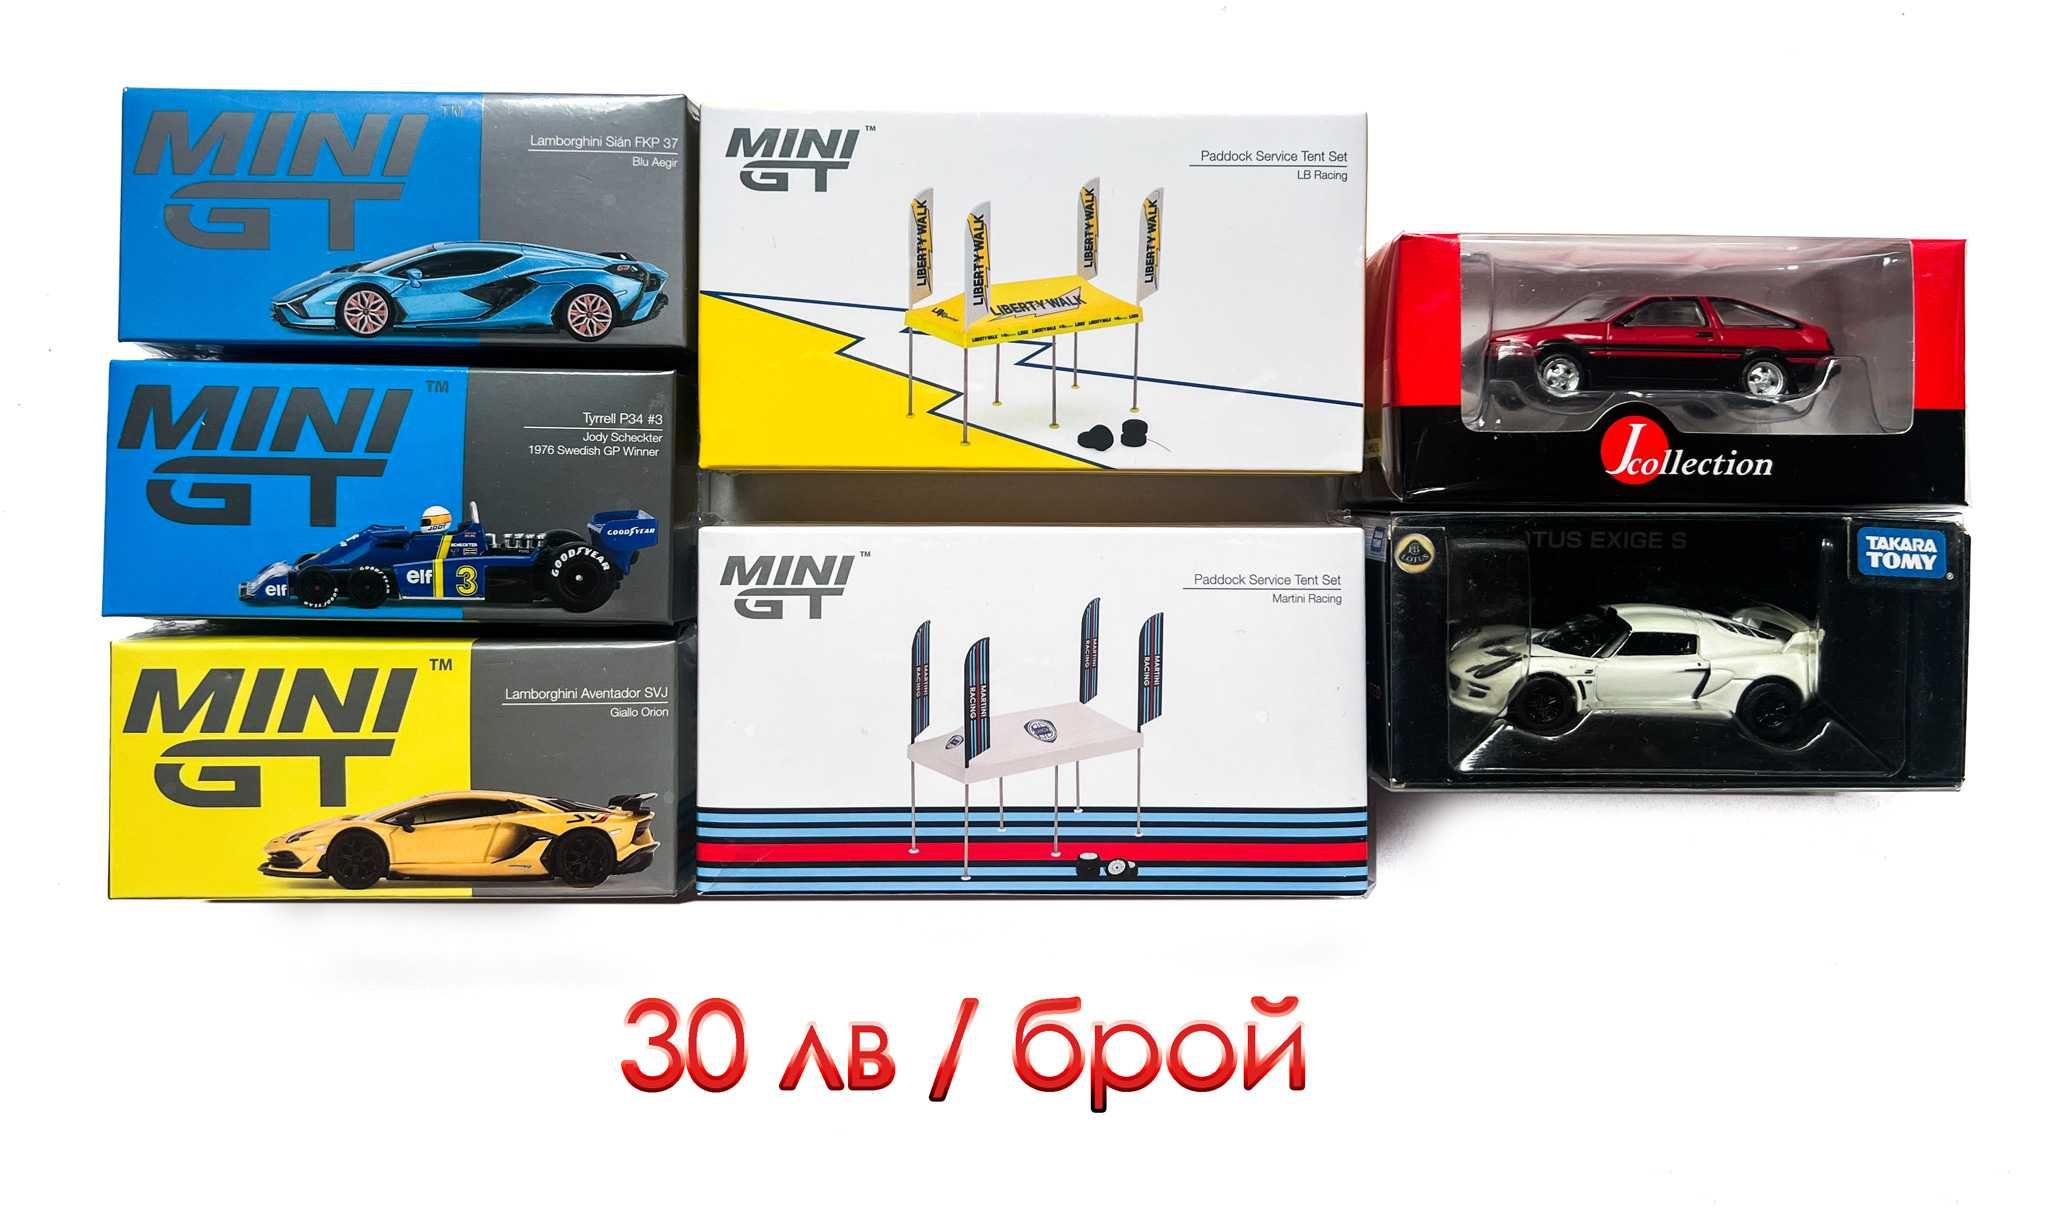 Hot Wheels Premium, Fast & Furious, Collectors, Boulevard, Tomica